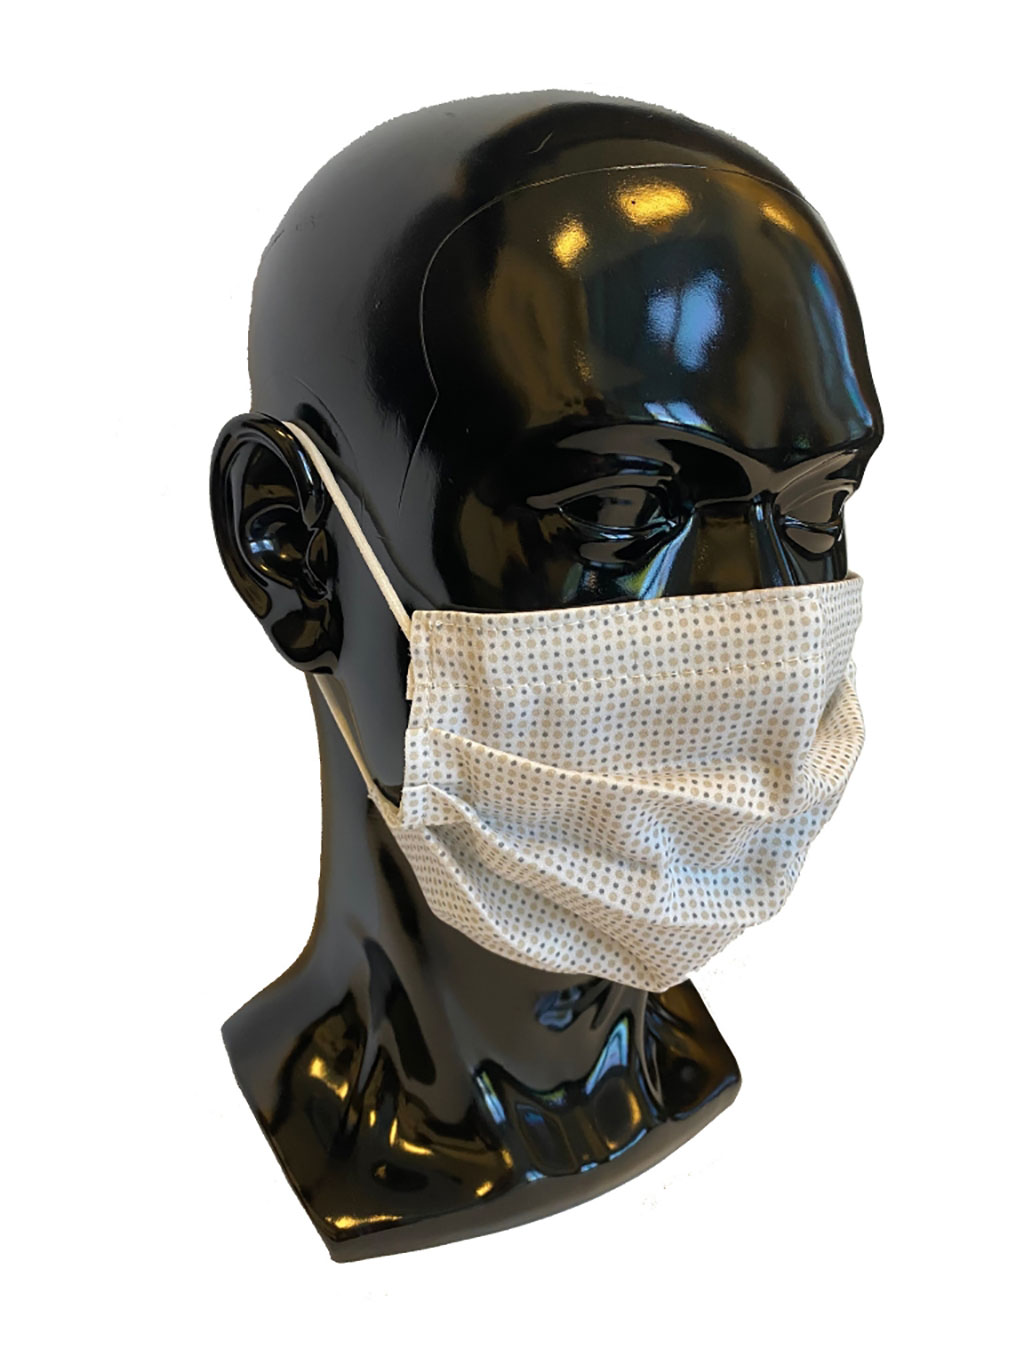 Image: Electric Anti-Viral Face Mask (Photo courtesy of Chandan Sen)